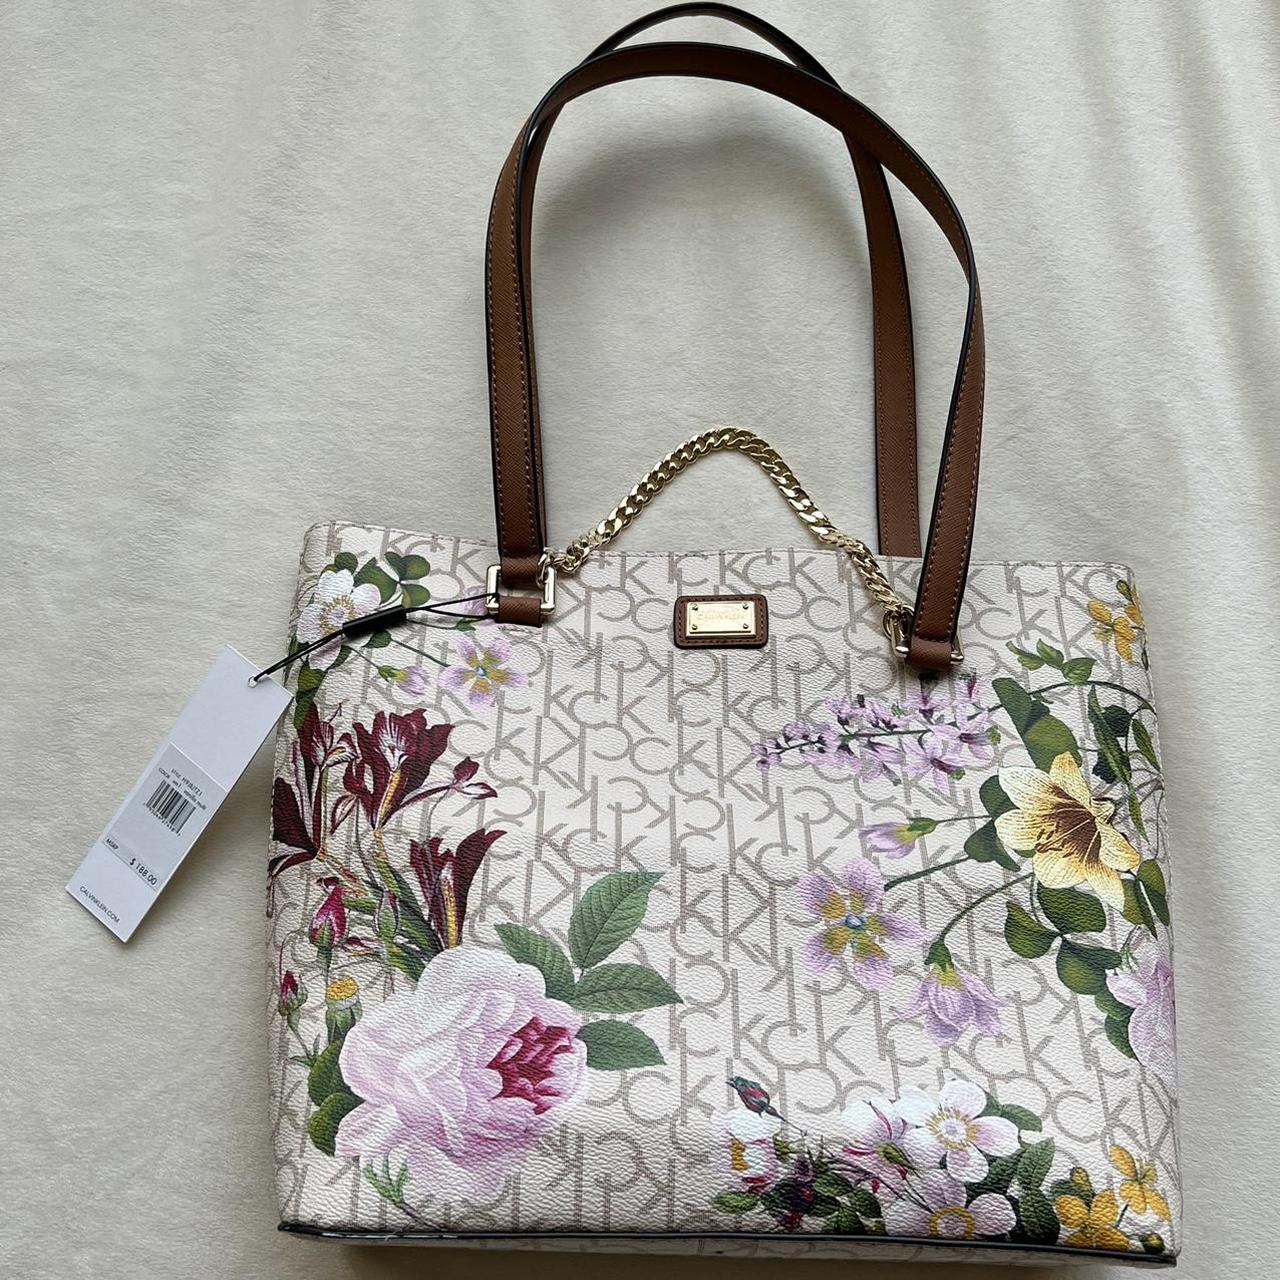 Calvin Klein Floral Tote Bags